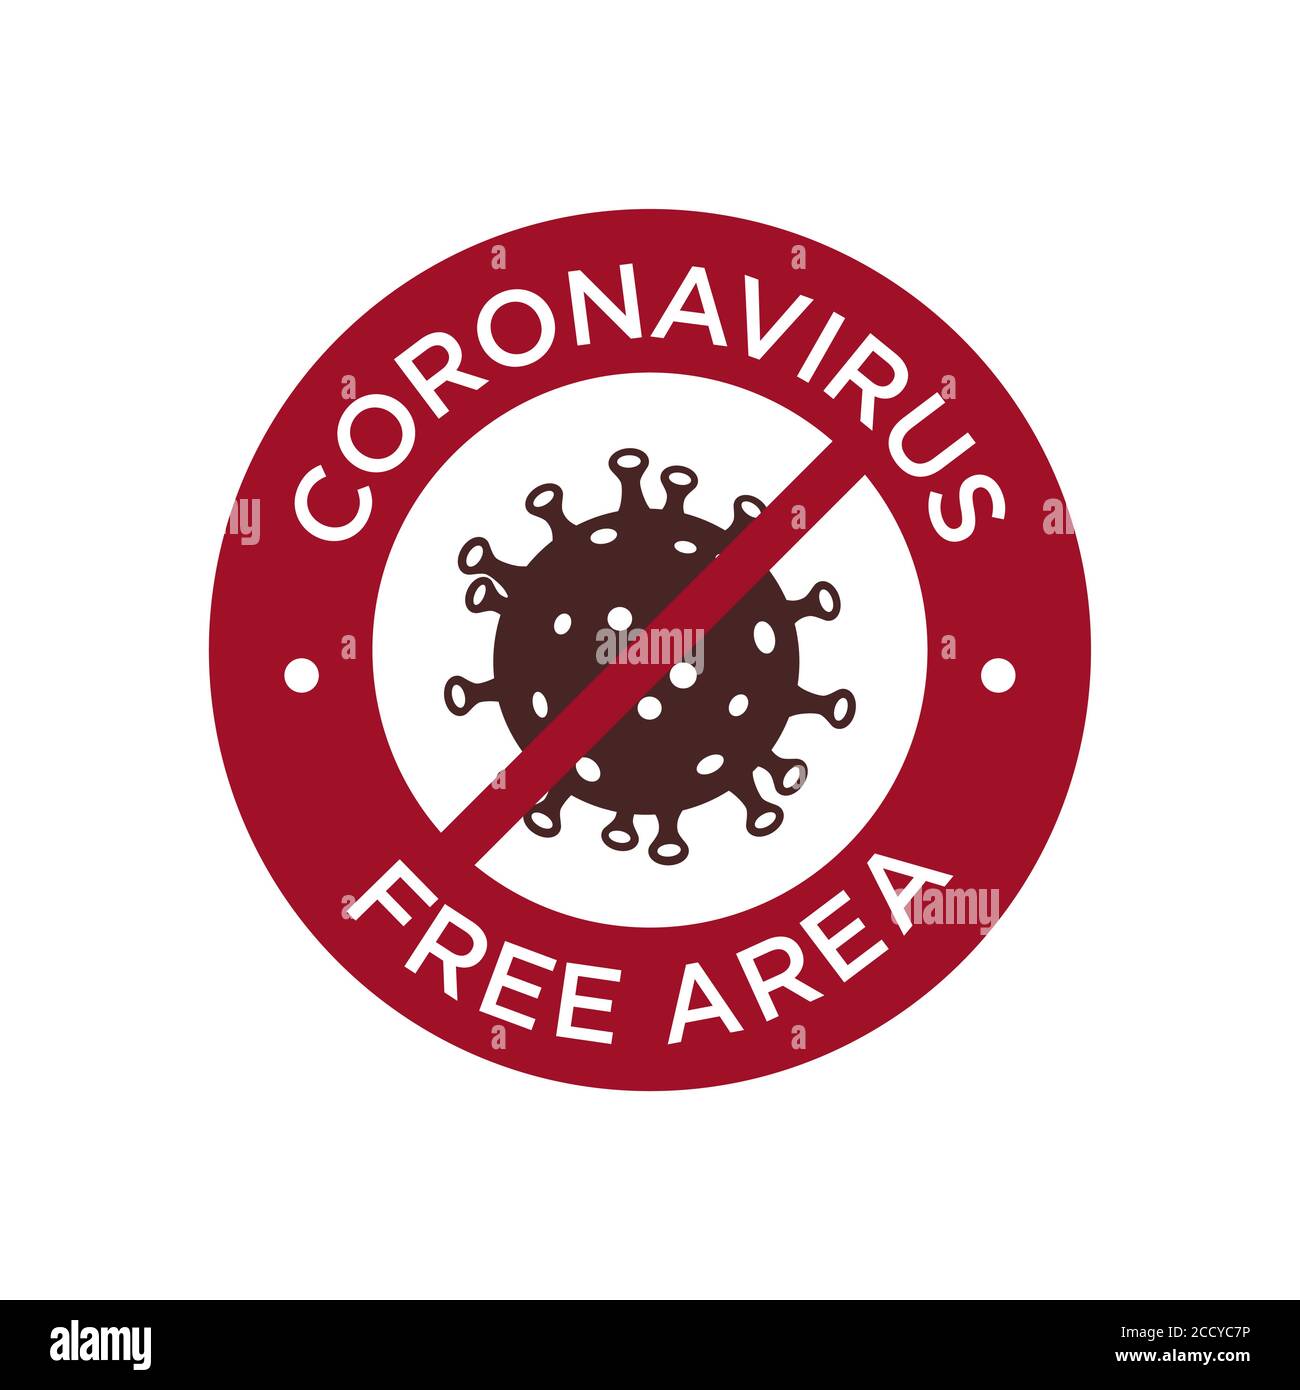 Coronavirus free area icon. Round symbol for disinfected areas of covid-19. Stock Vector